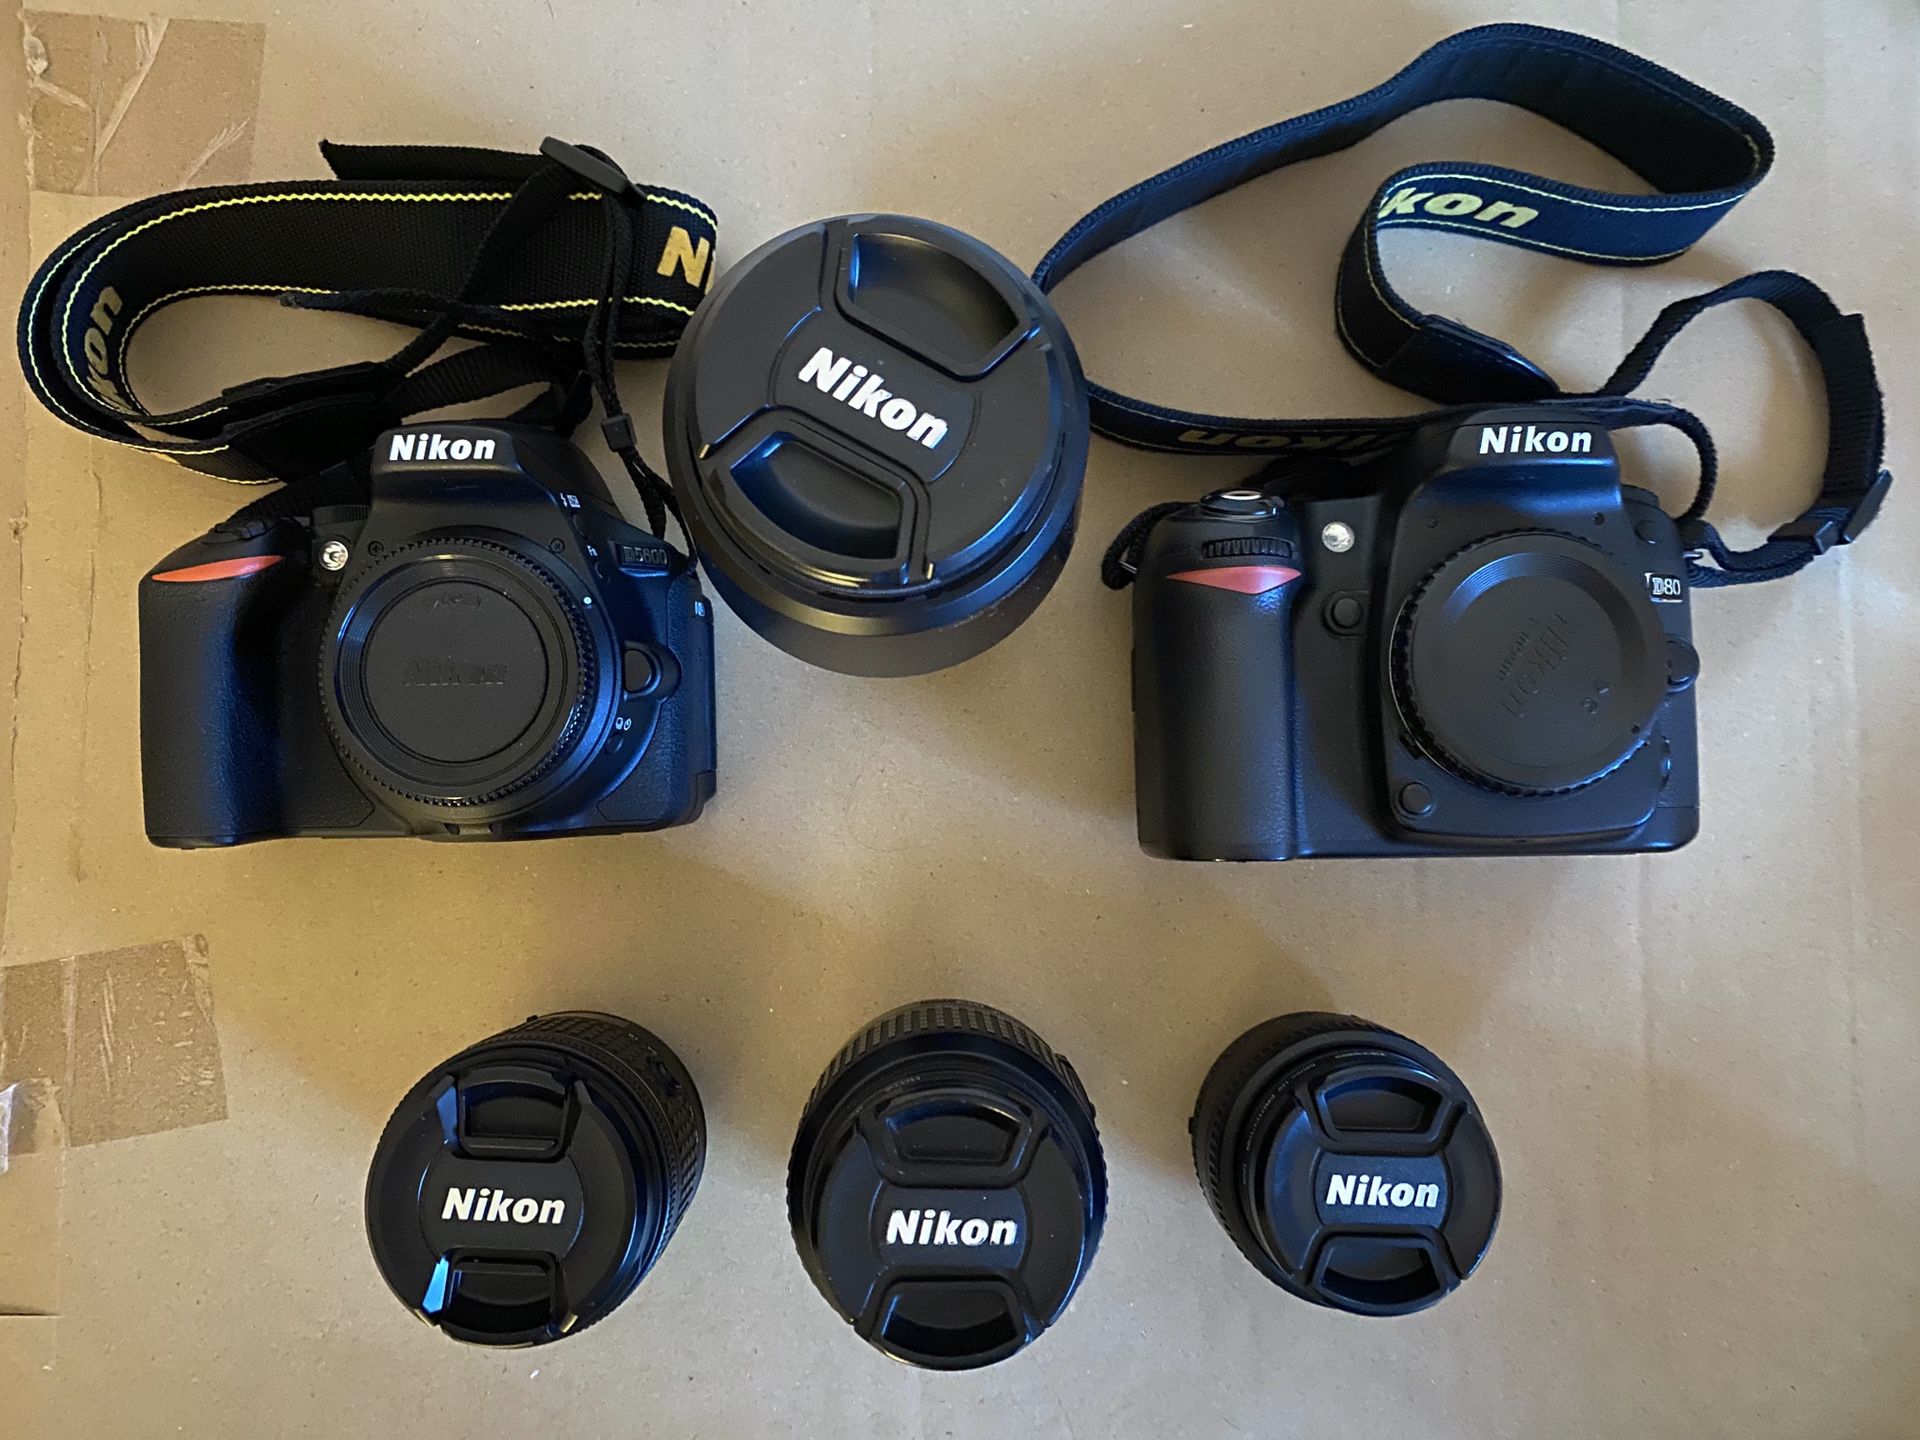 Nikon D5600-D80 cameras and lenses kit